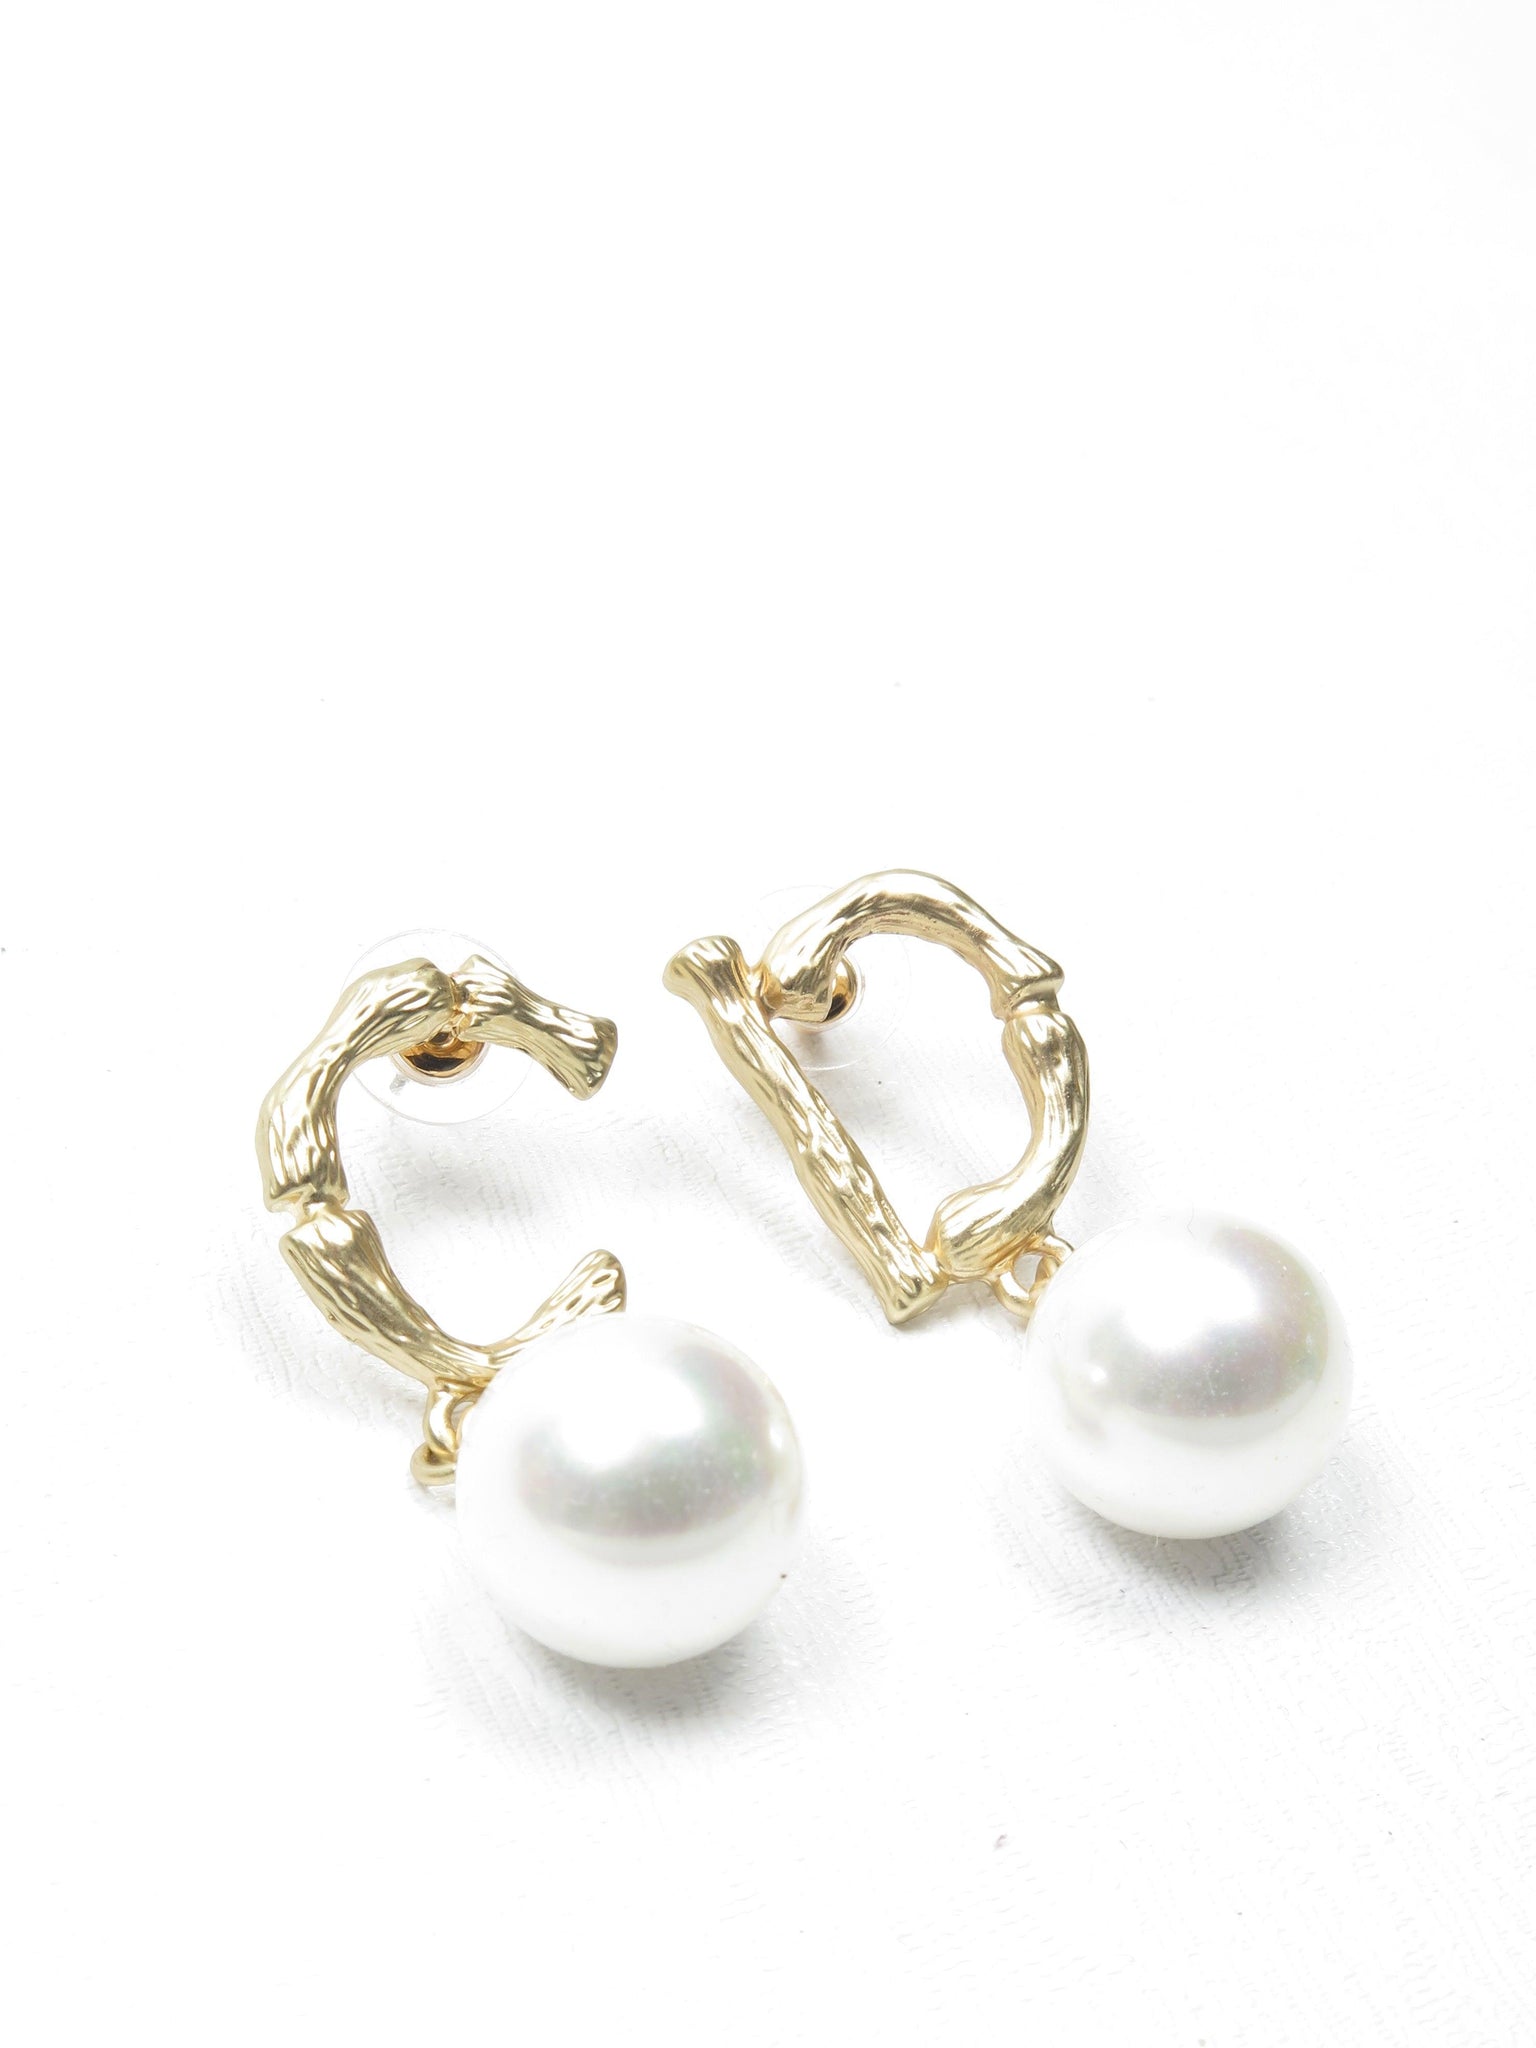 Designer Style Gold & Pearl Earrings - The Harlequin